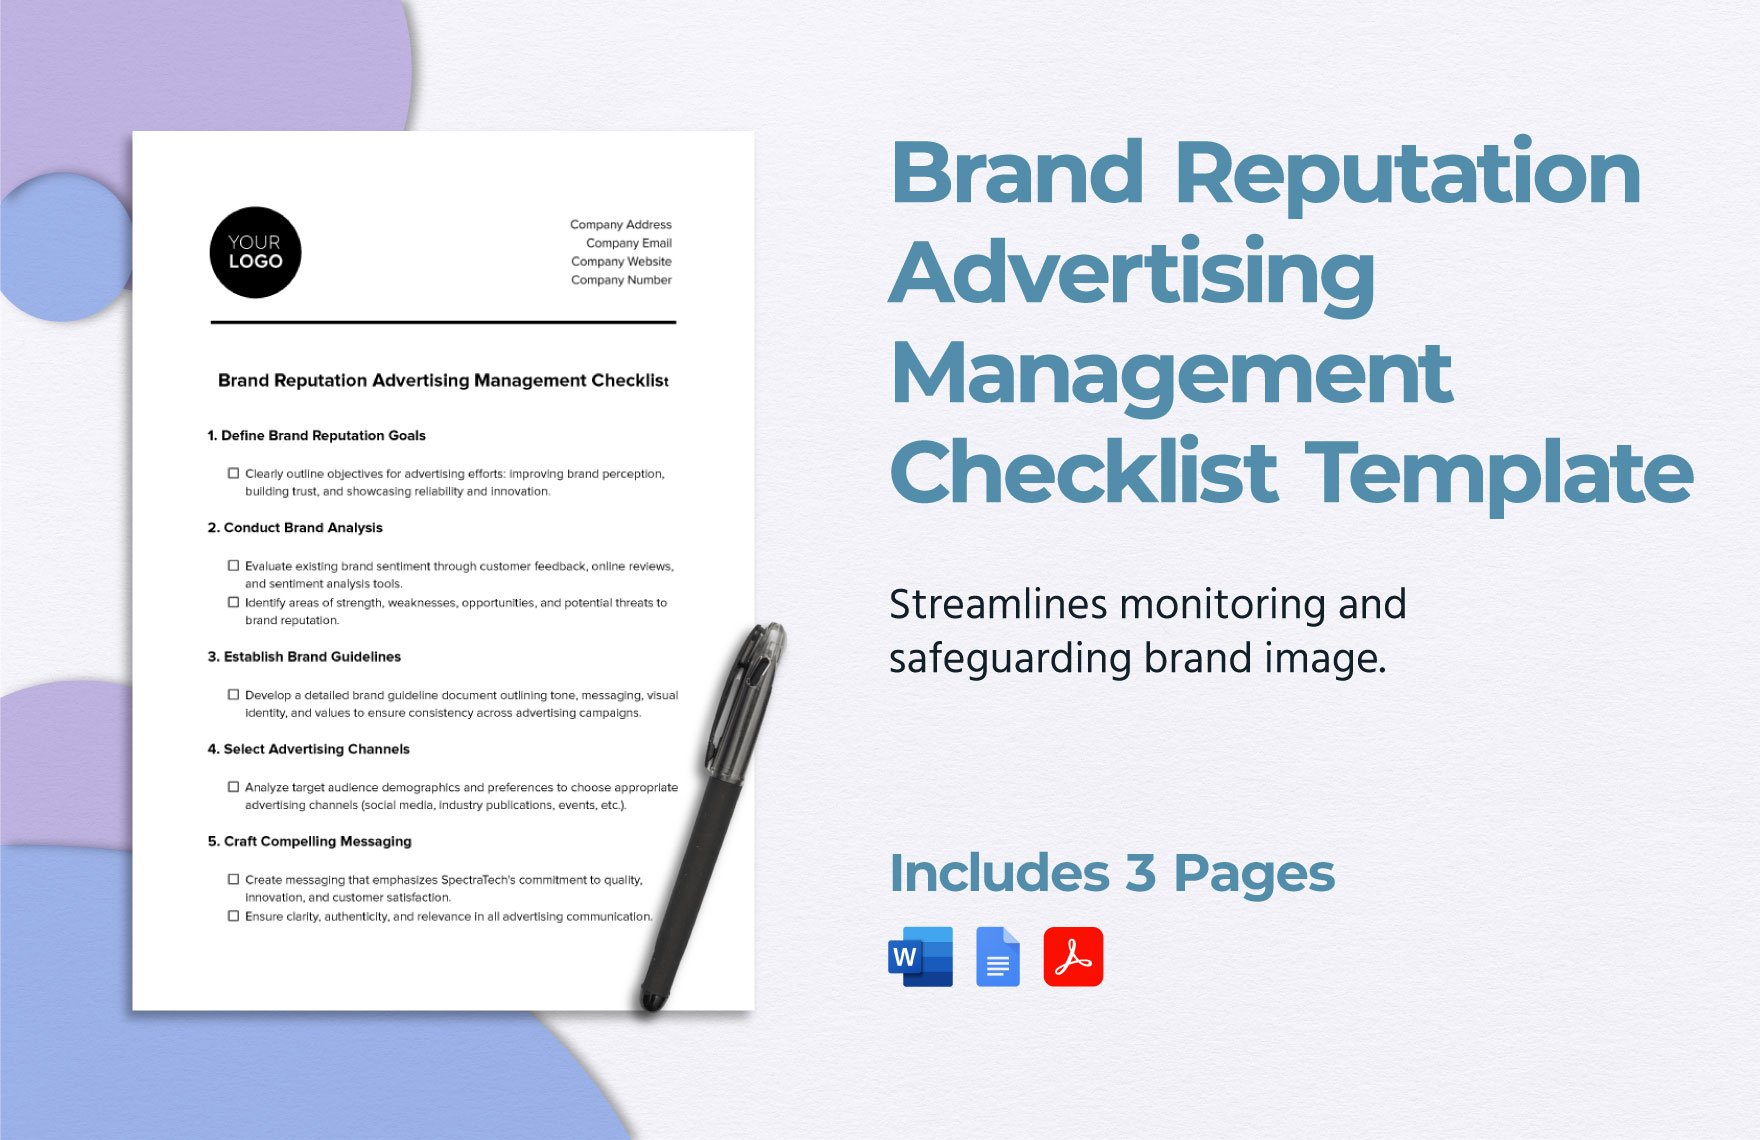 Brand Reputation Advertising Management Checklist Template in Word, Google Docs, PDF